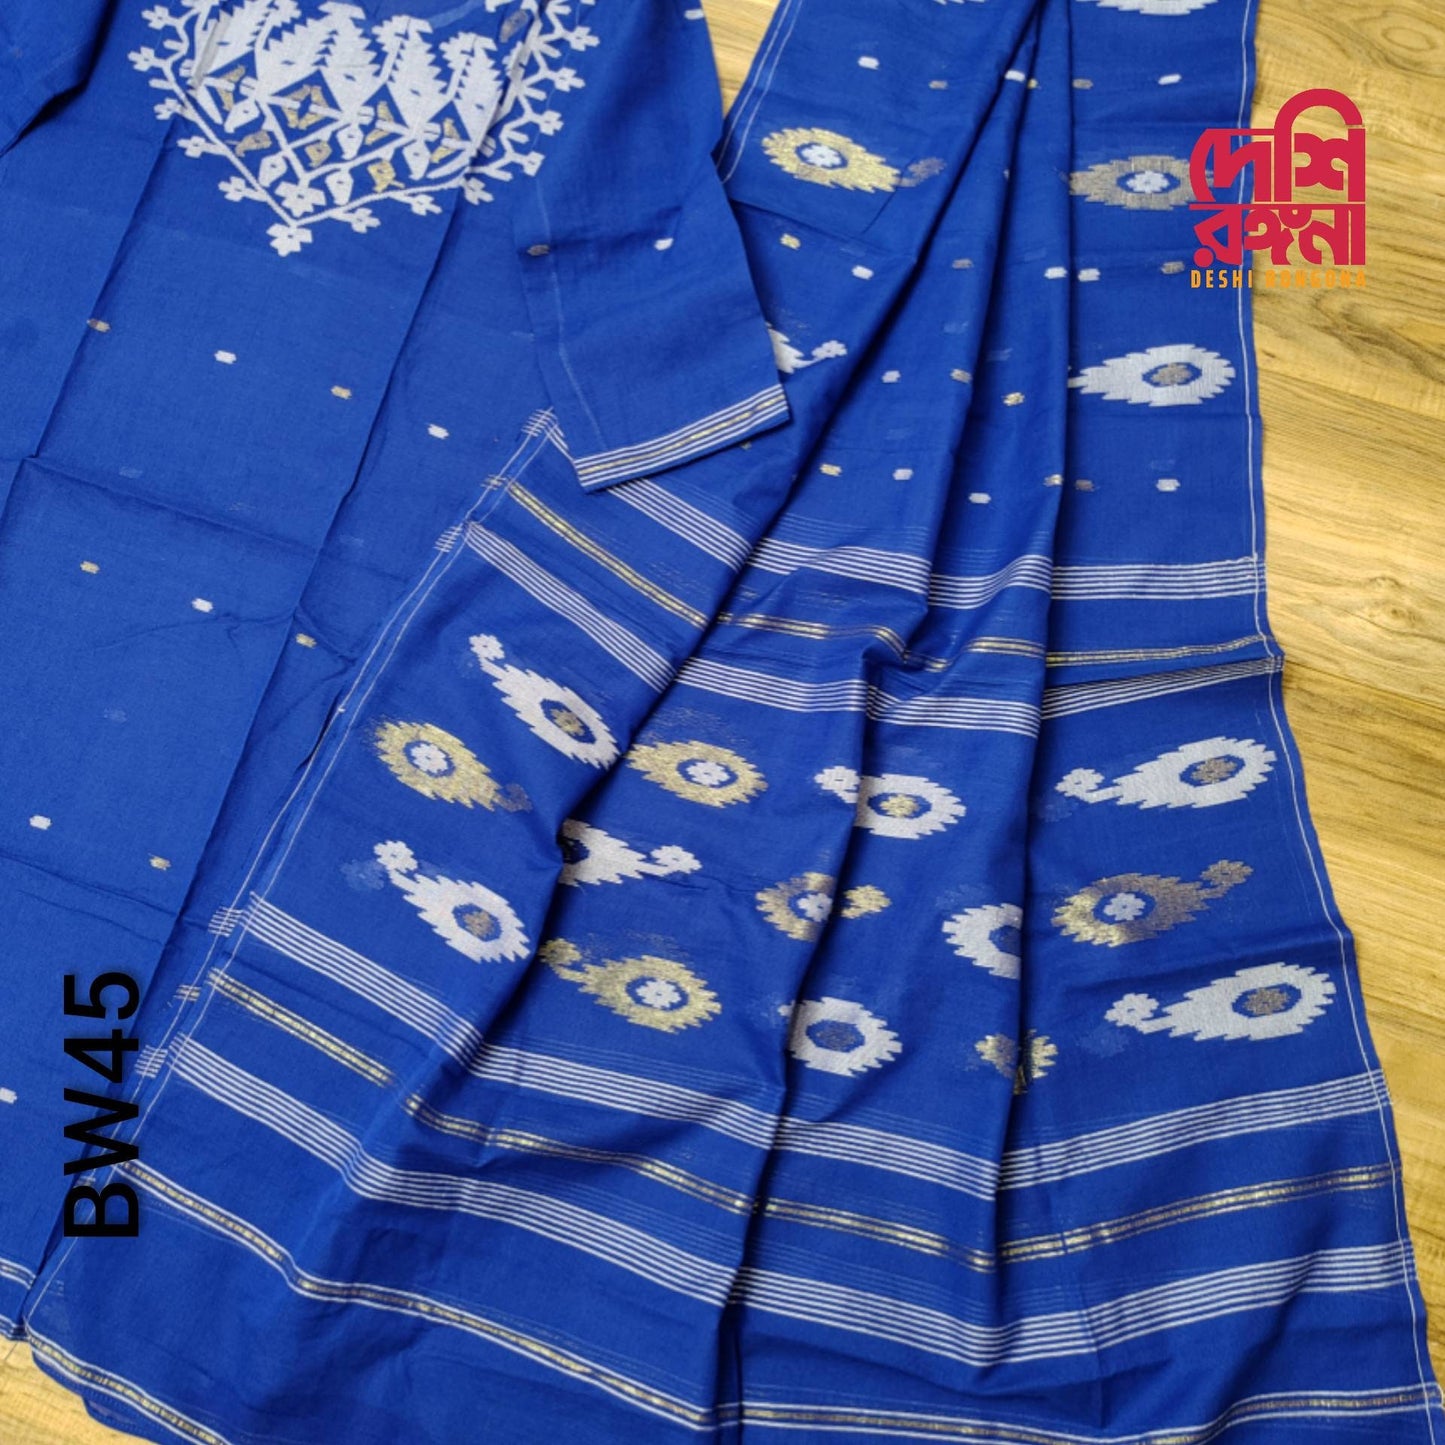 Original Dhakai Jamdani Cotton 2 piece, Blue Jamdani Dress, 100% Handwoven Cotton, Handmade, Soft,Comfortable Summer Wear, Kamij and Dupatta